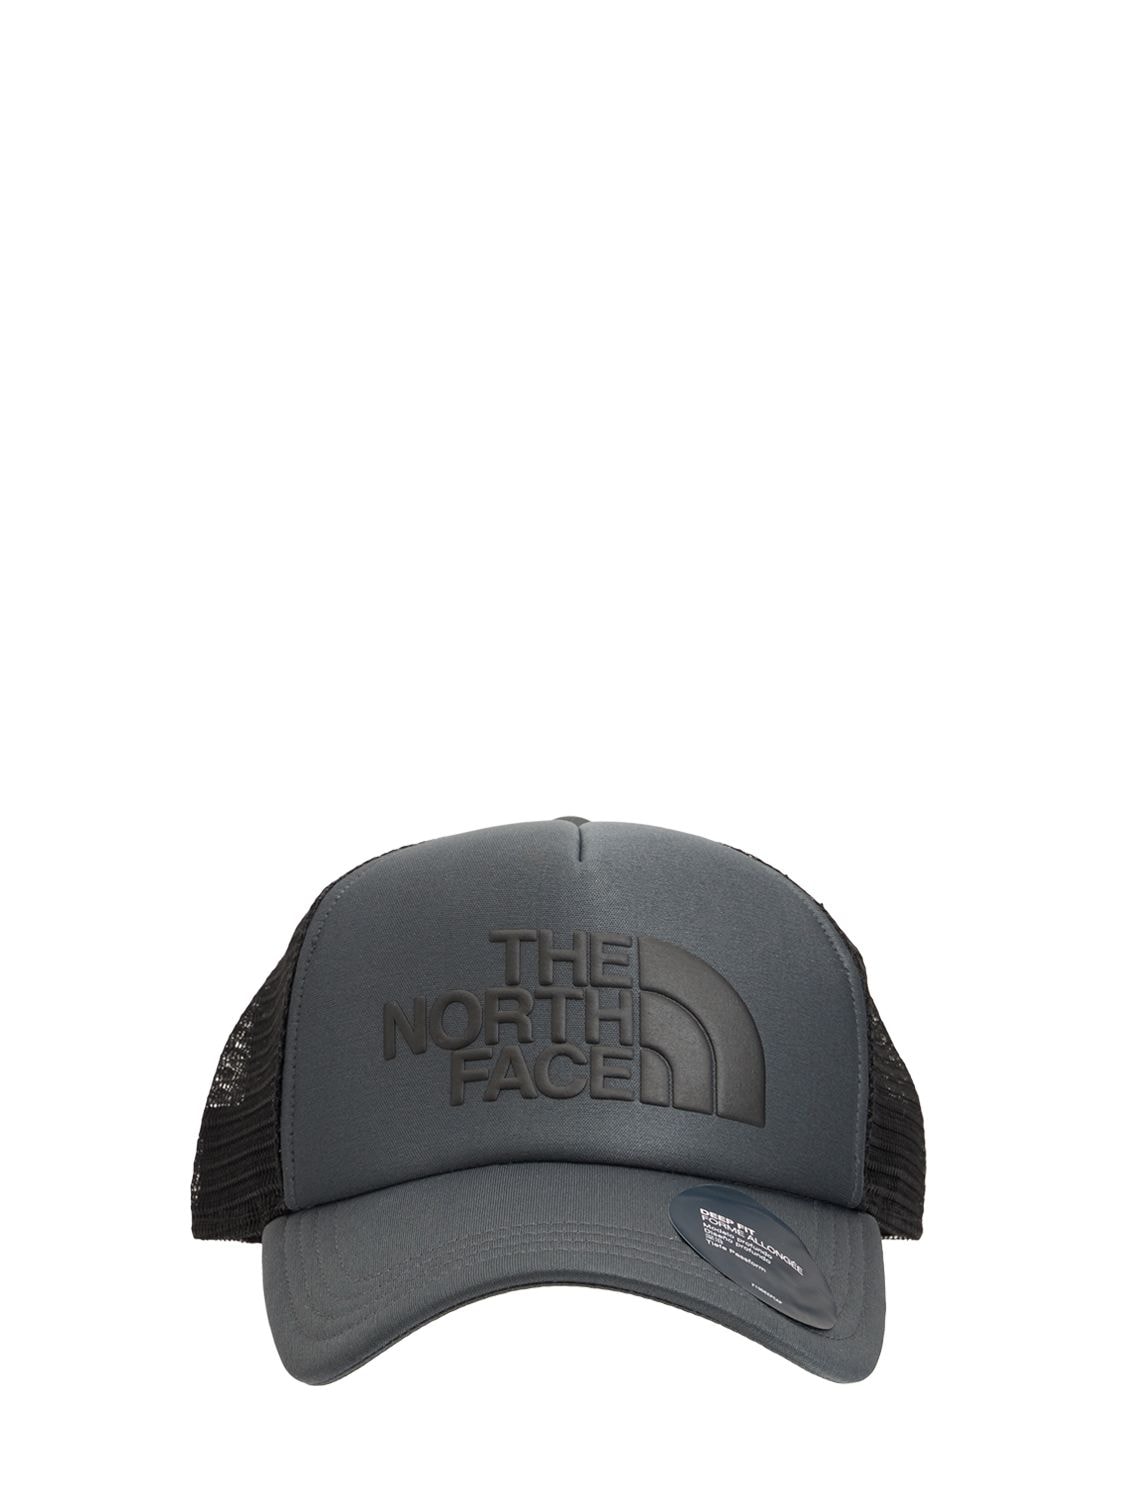 The North Face Logo Trucker Hat In Asphalt Grey